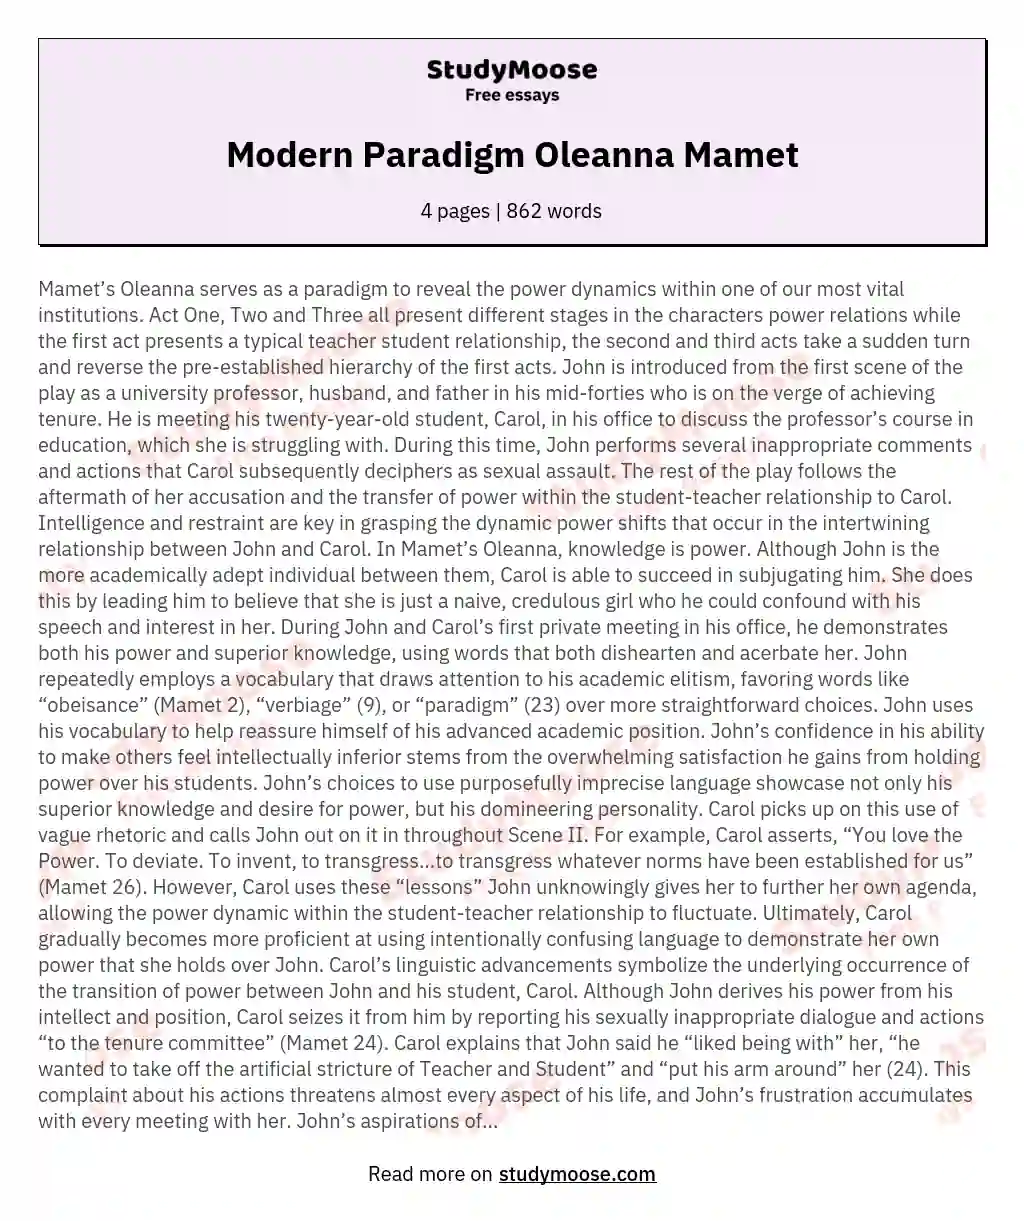 Modern Paradigm Oleanna Mamet essay